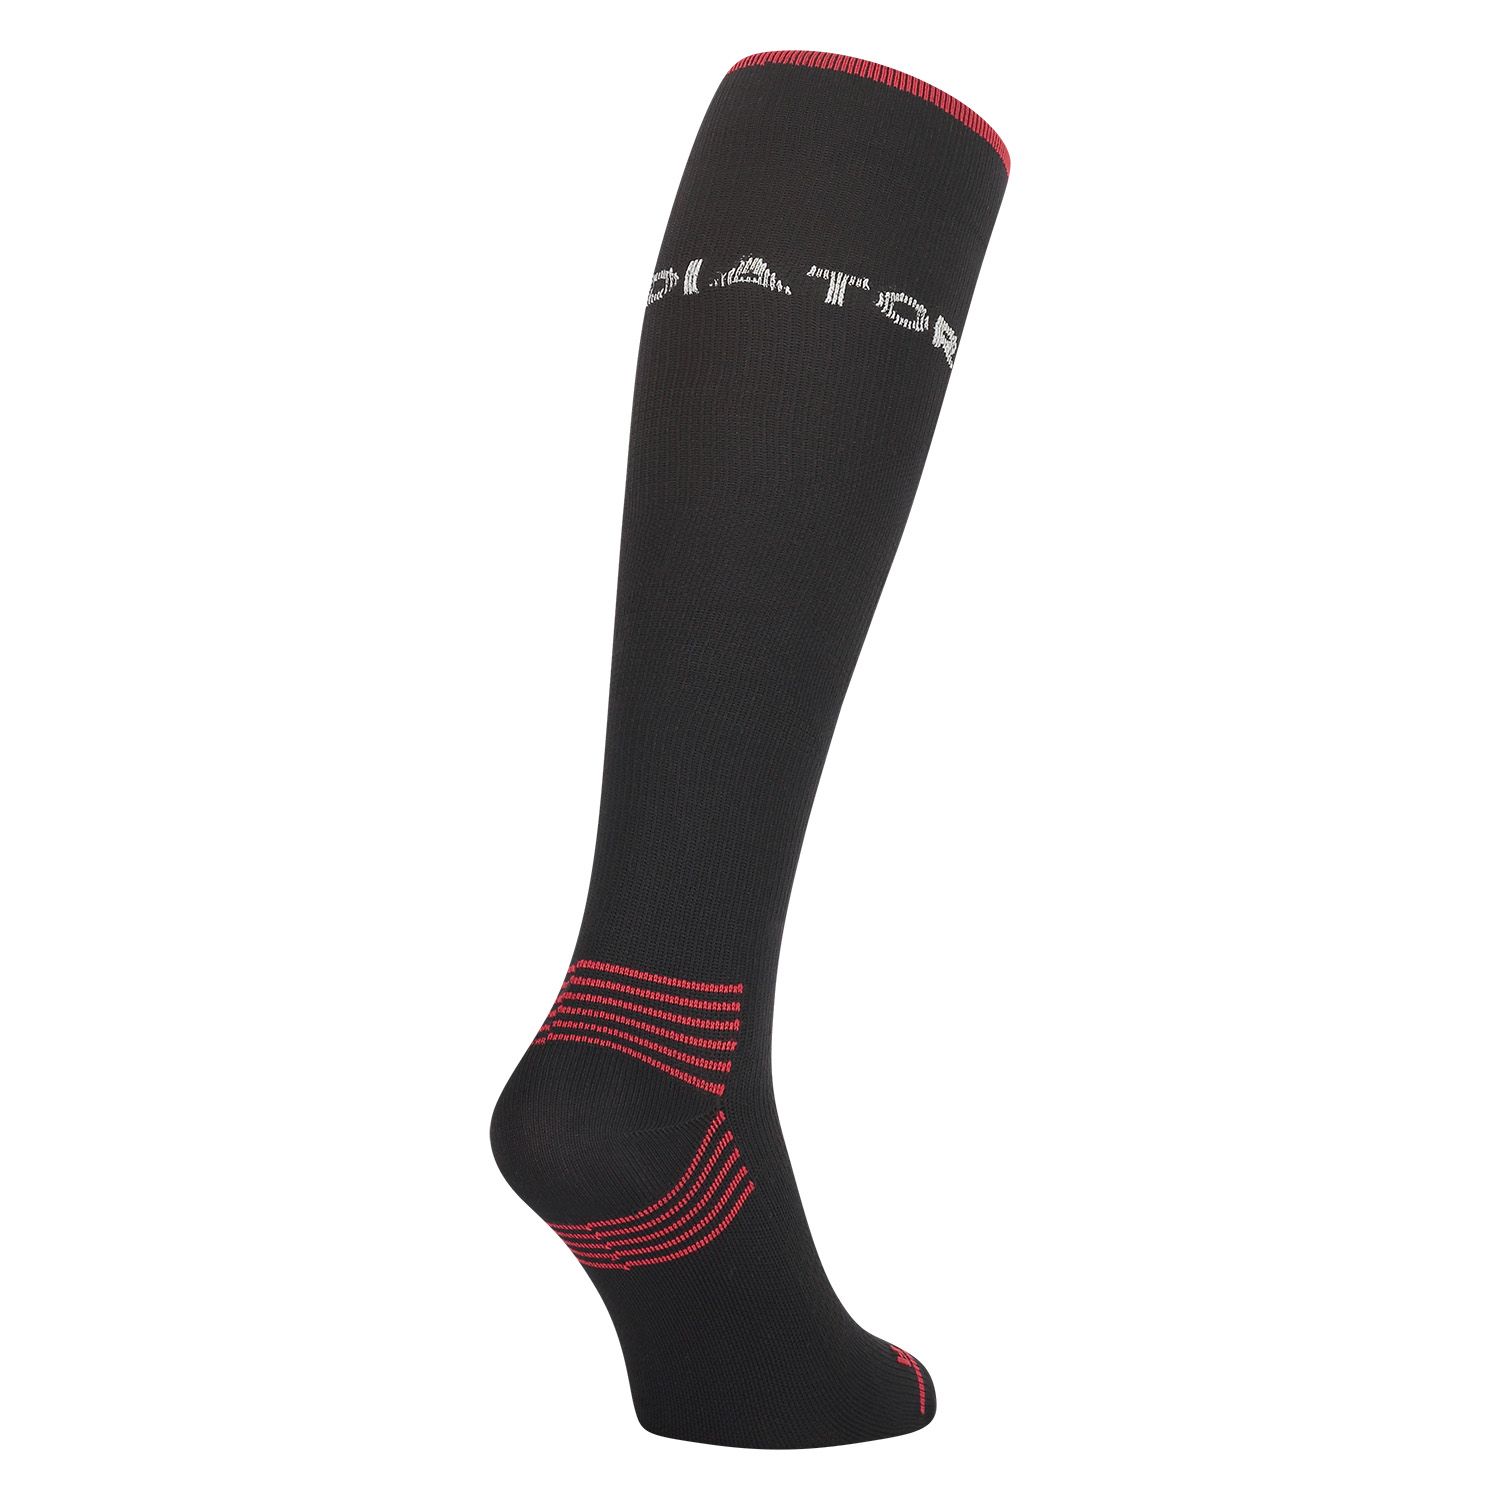 gladiator sports running stockings in black